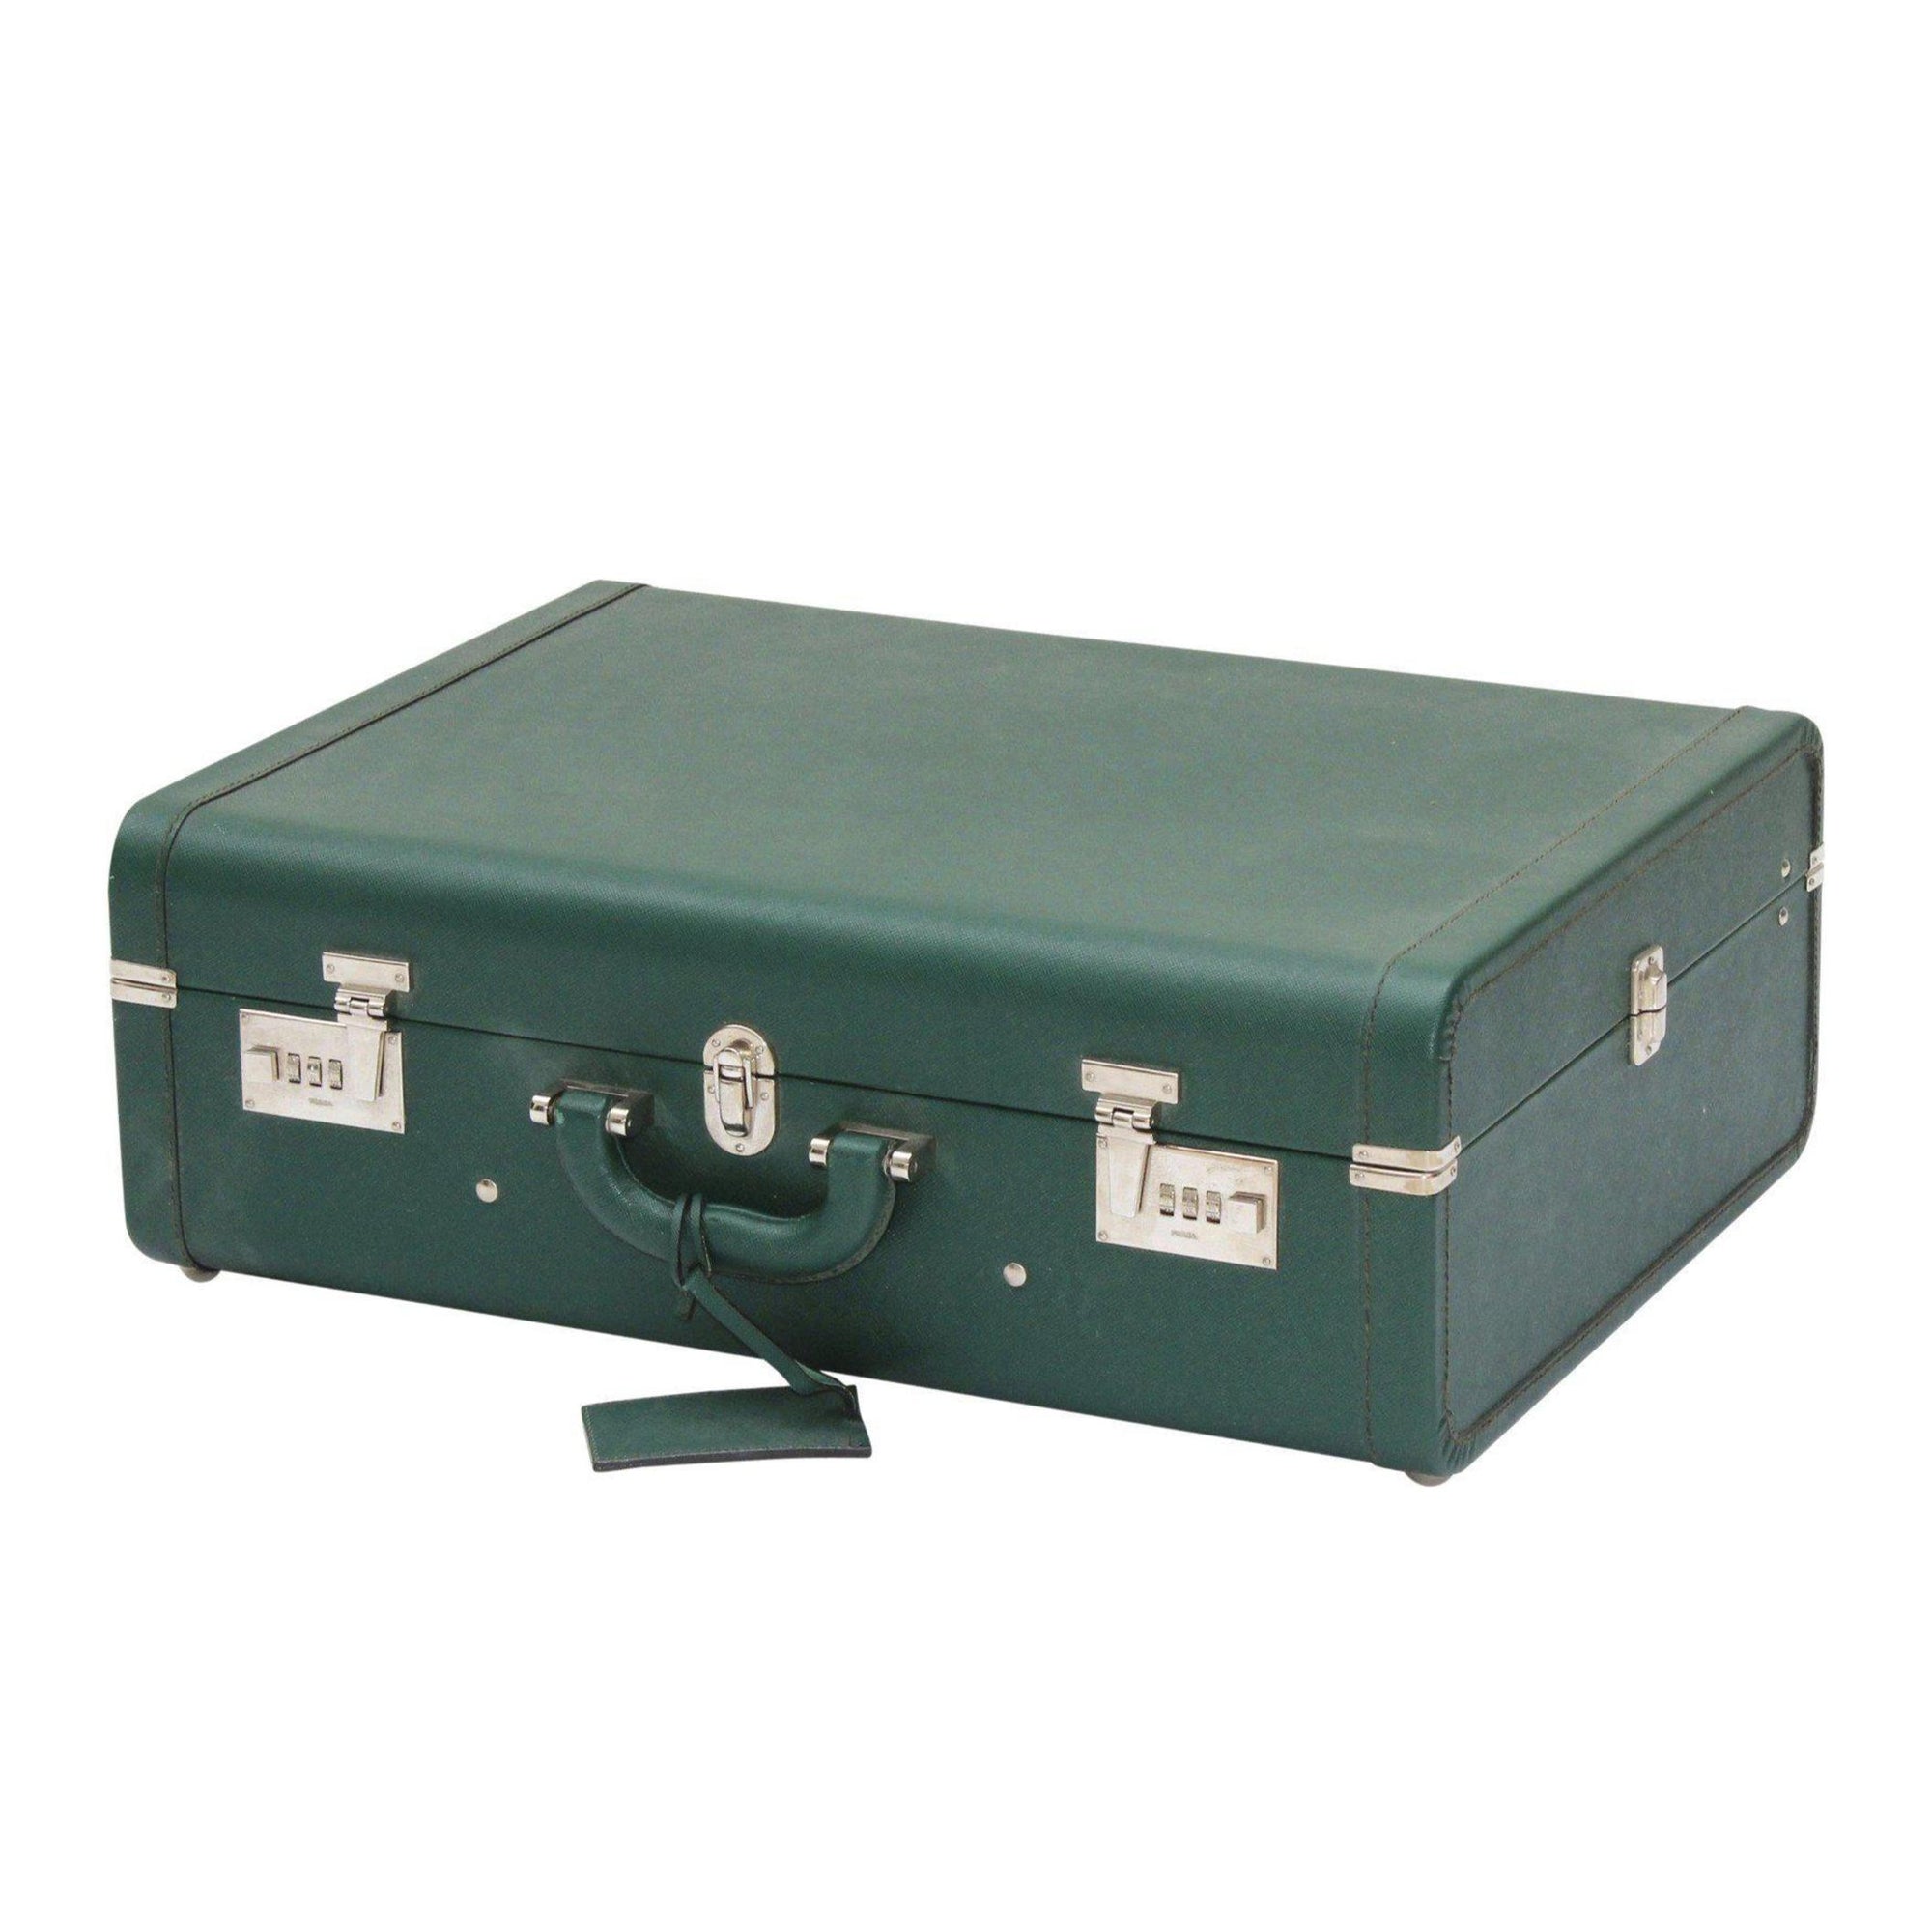 Prada Green Suitcase